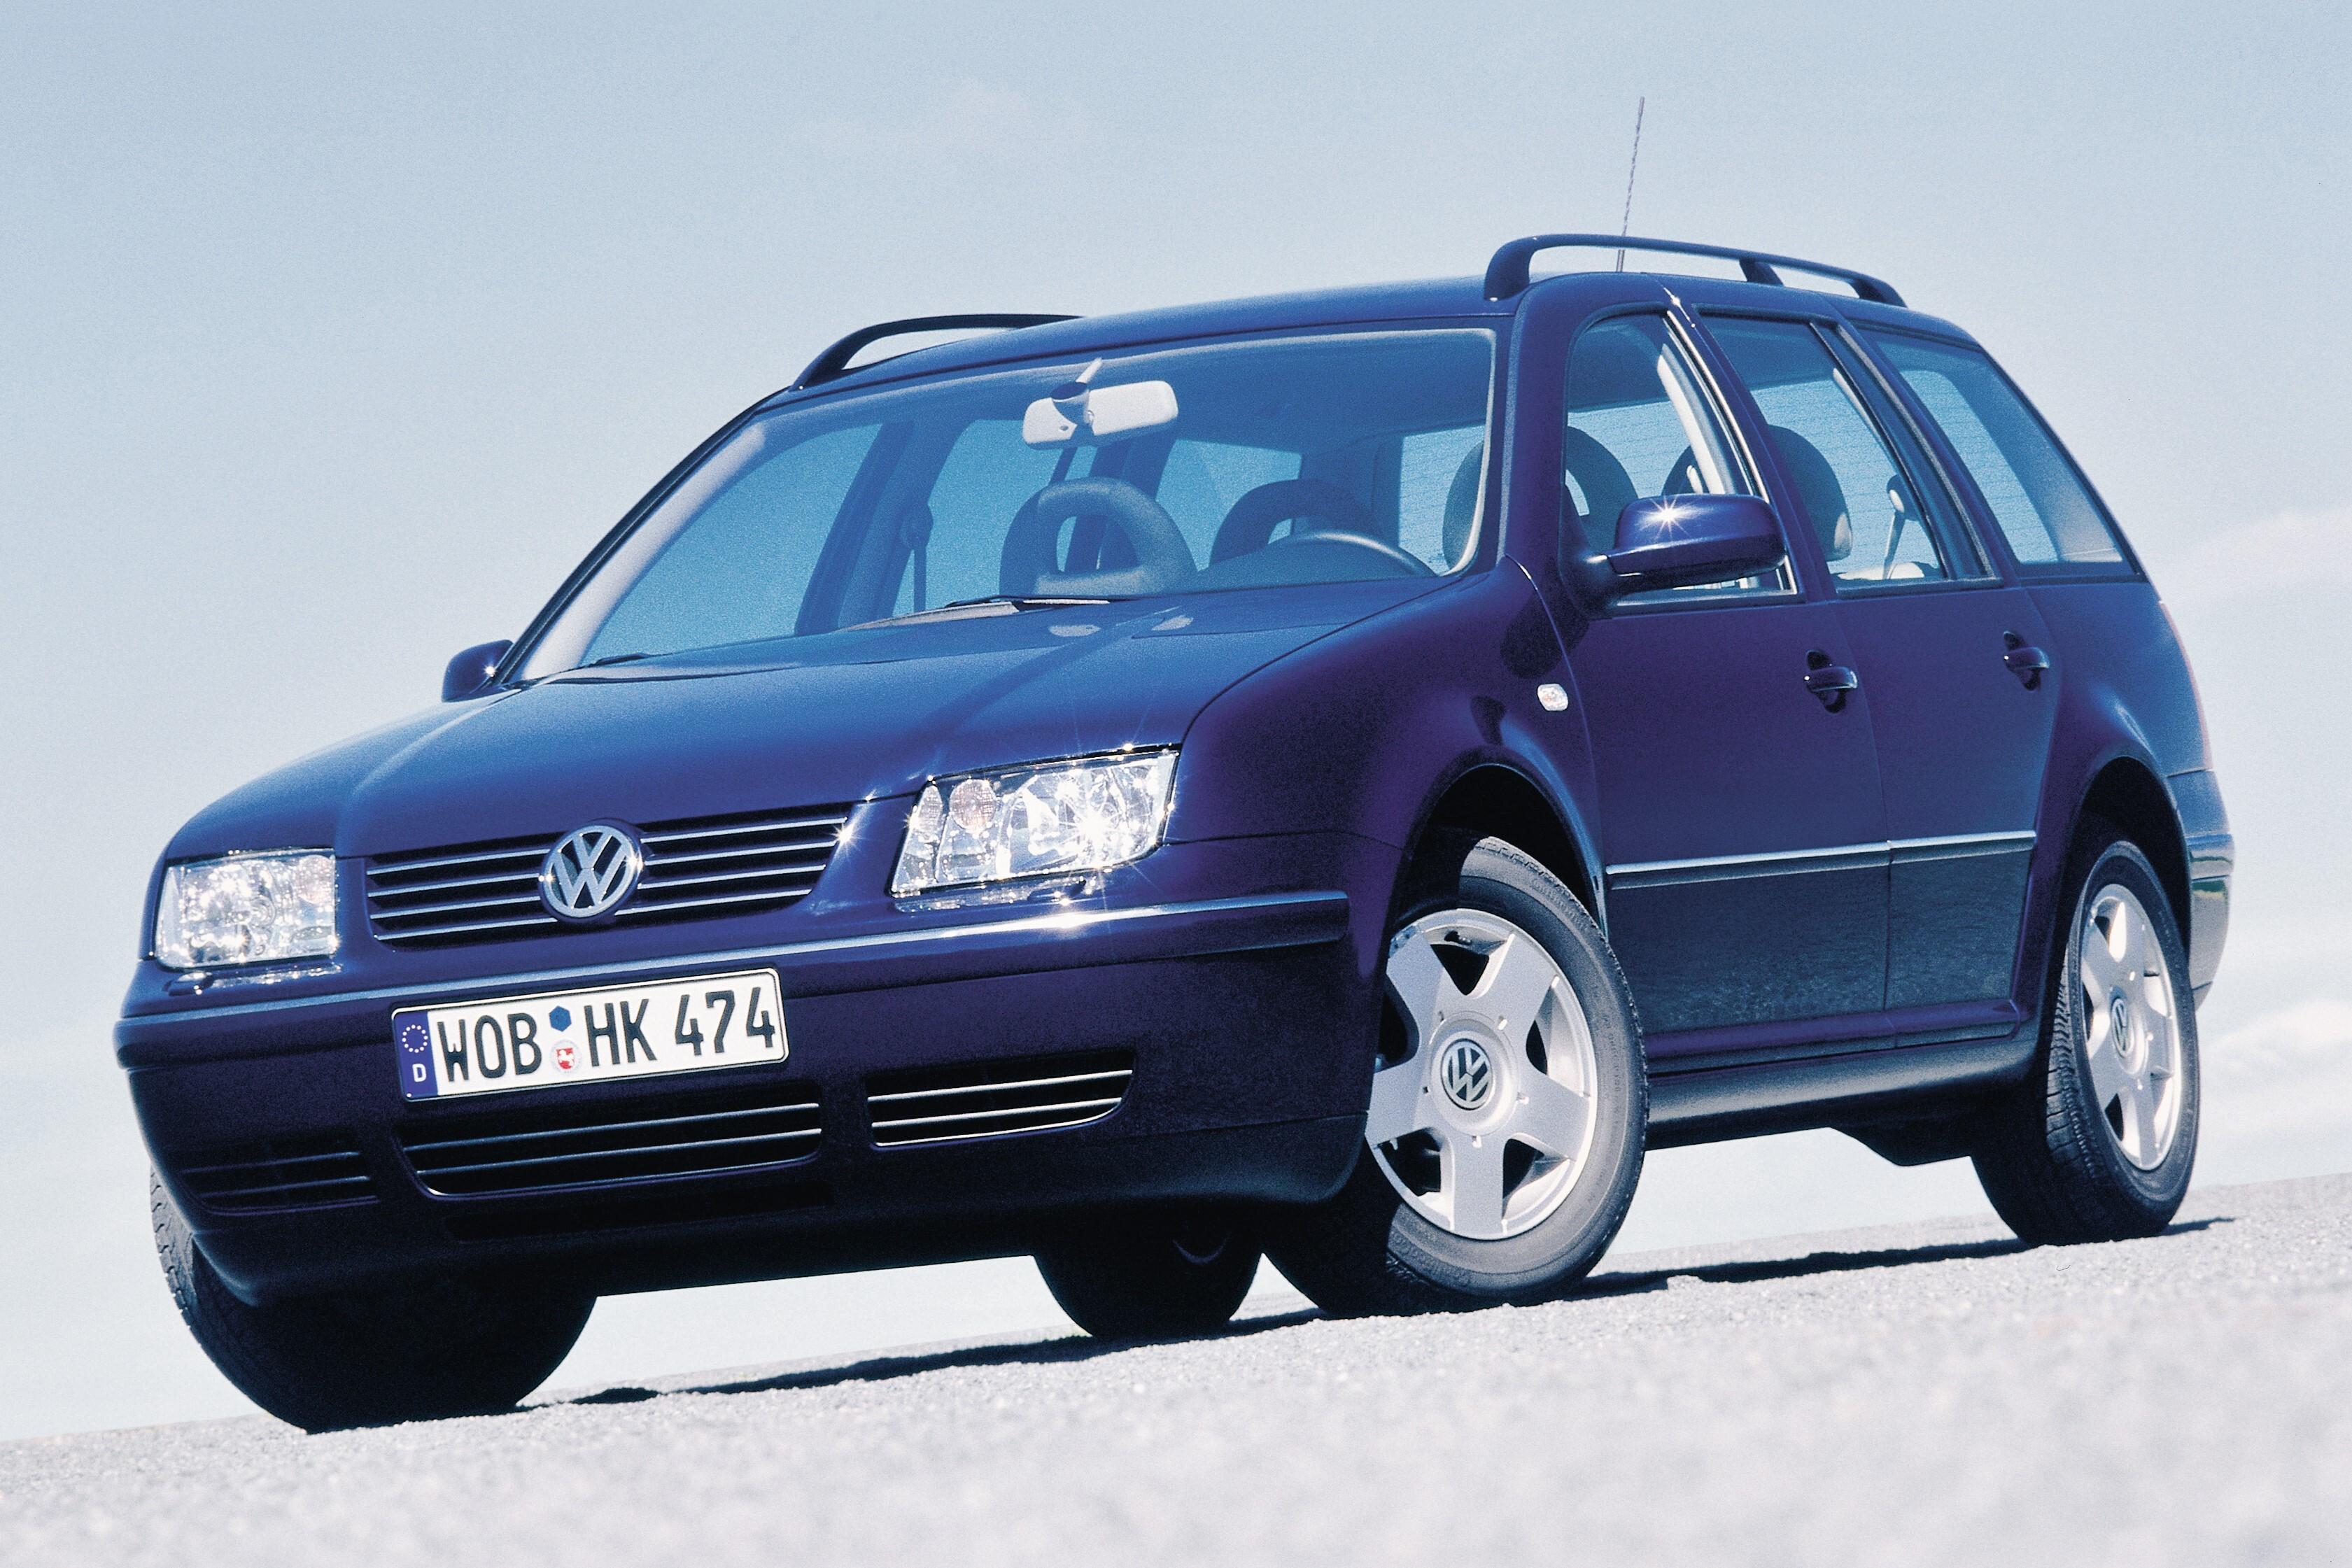 Фольксваген универсал бензин. Volkswagen Bora универсал. Volkswagen Bora 1 поколение. Фольксваген Бора универсал 2000. Volkswagen Bora 1999 универсал.